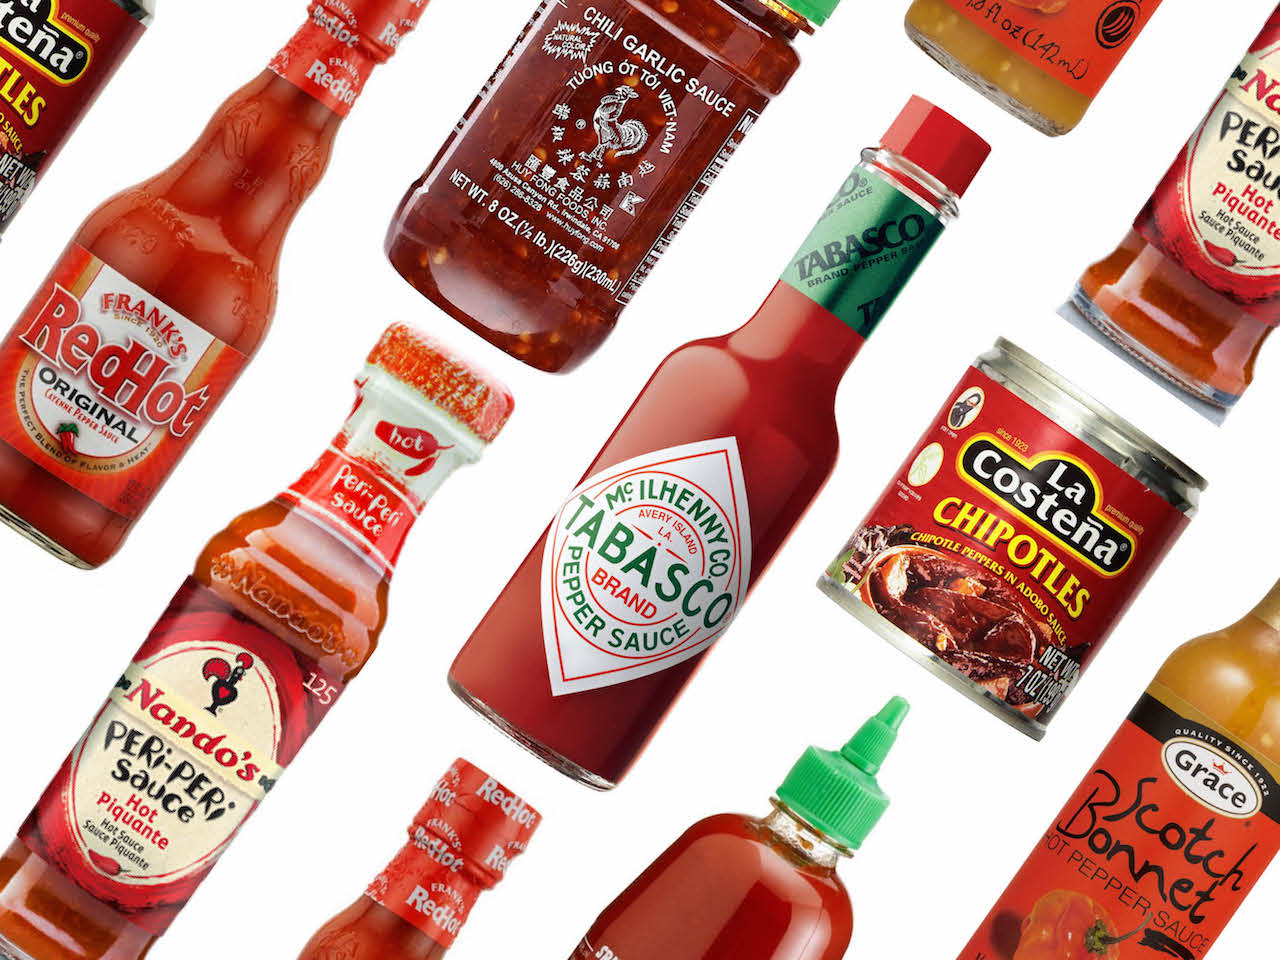 Best hot sauces: Peri peri, tabasco, chipotle, sriracha